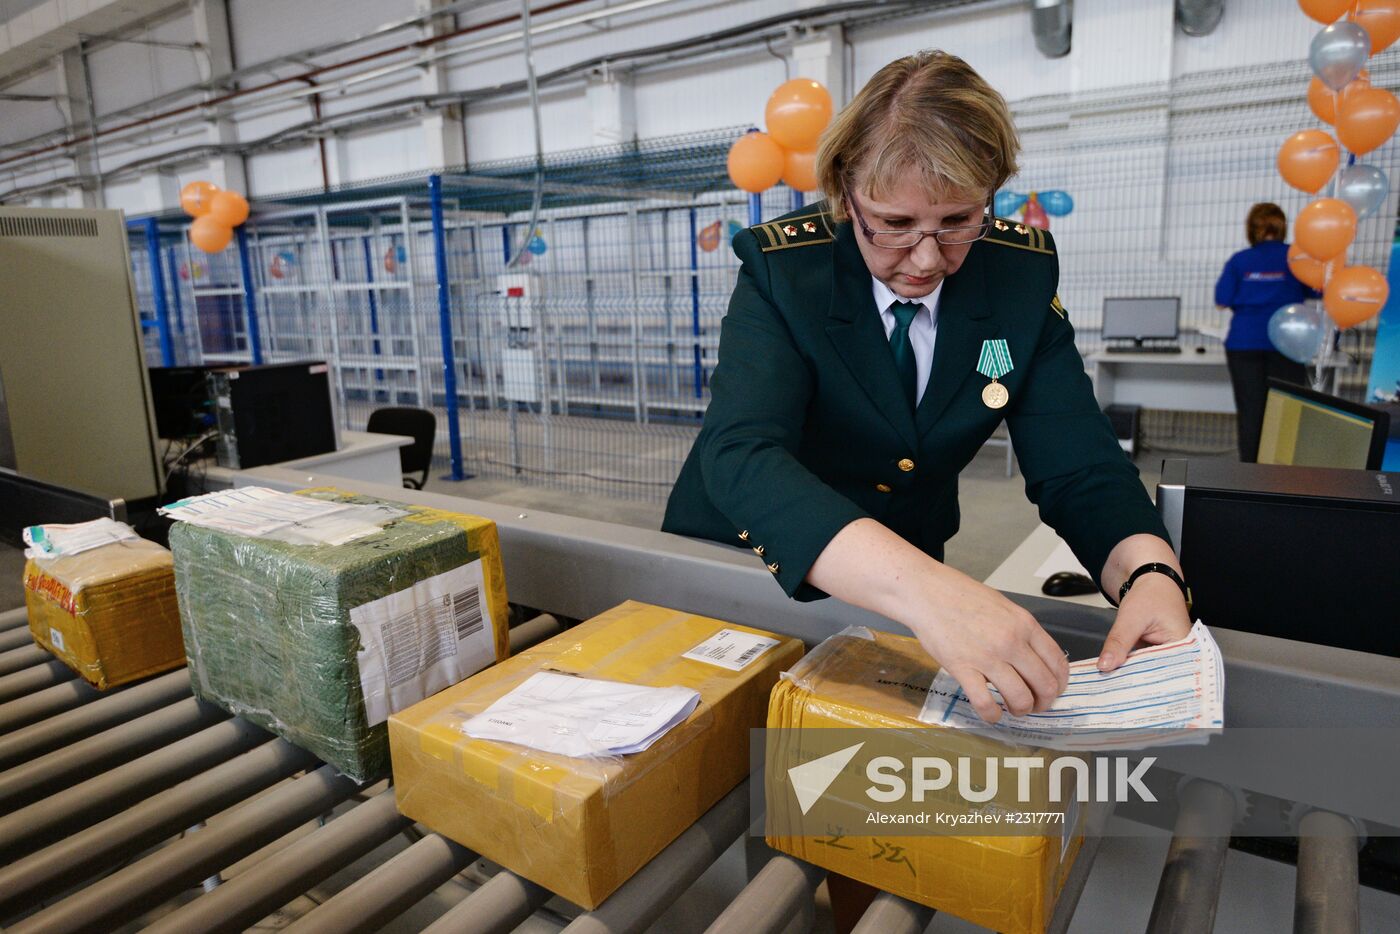 International postal exchange office opened in Novosibirsk